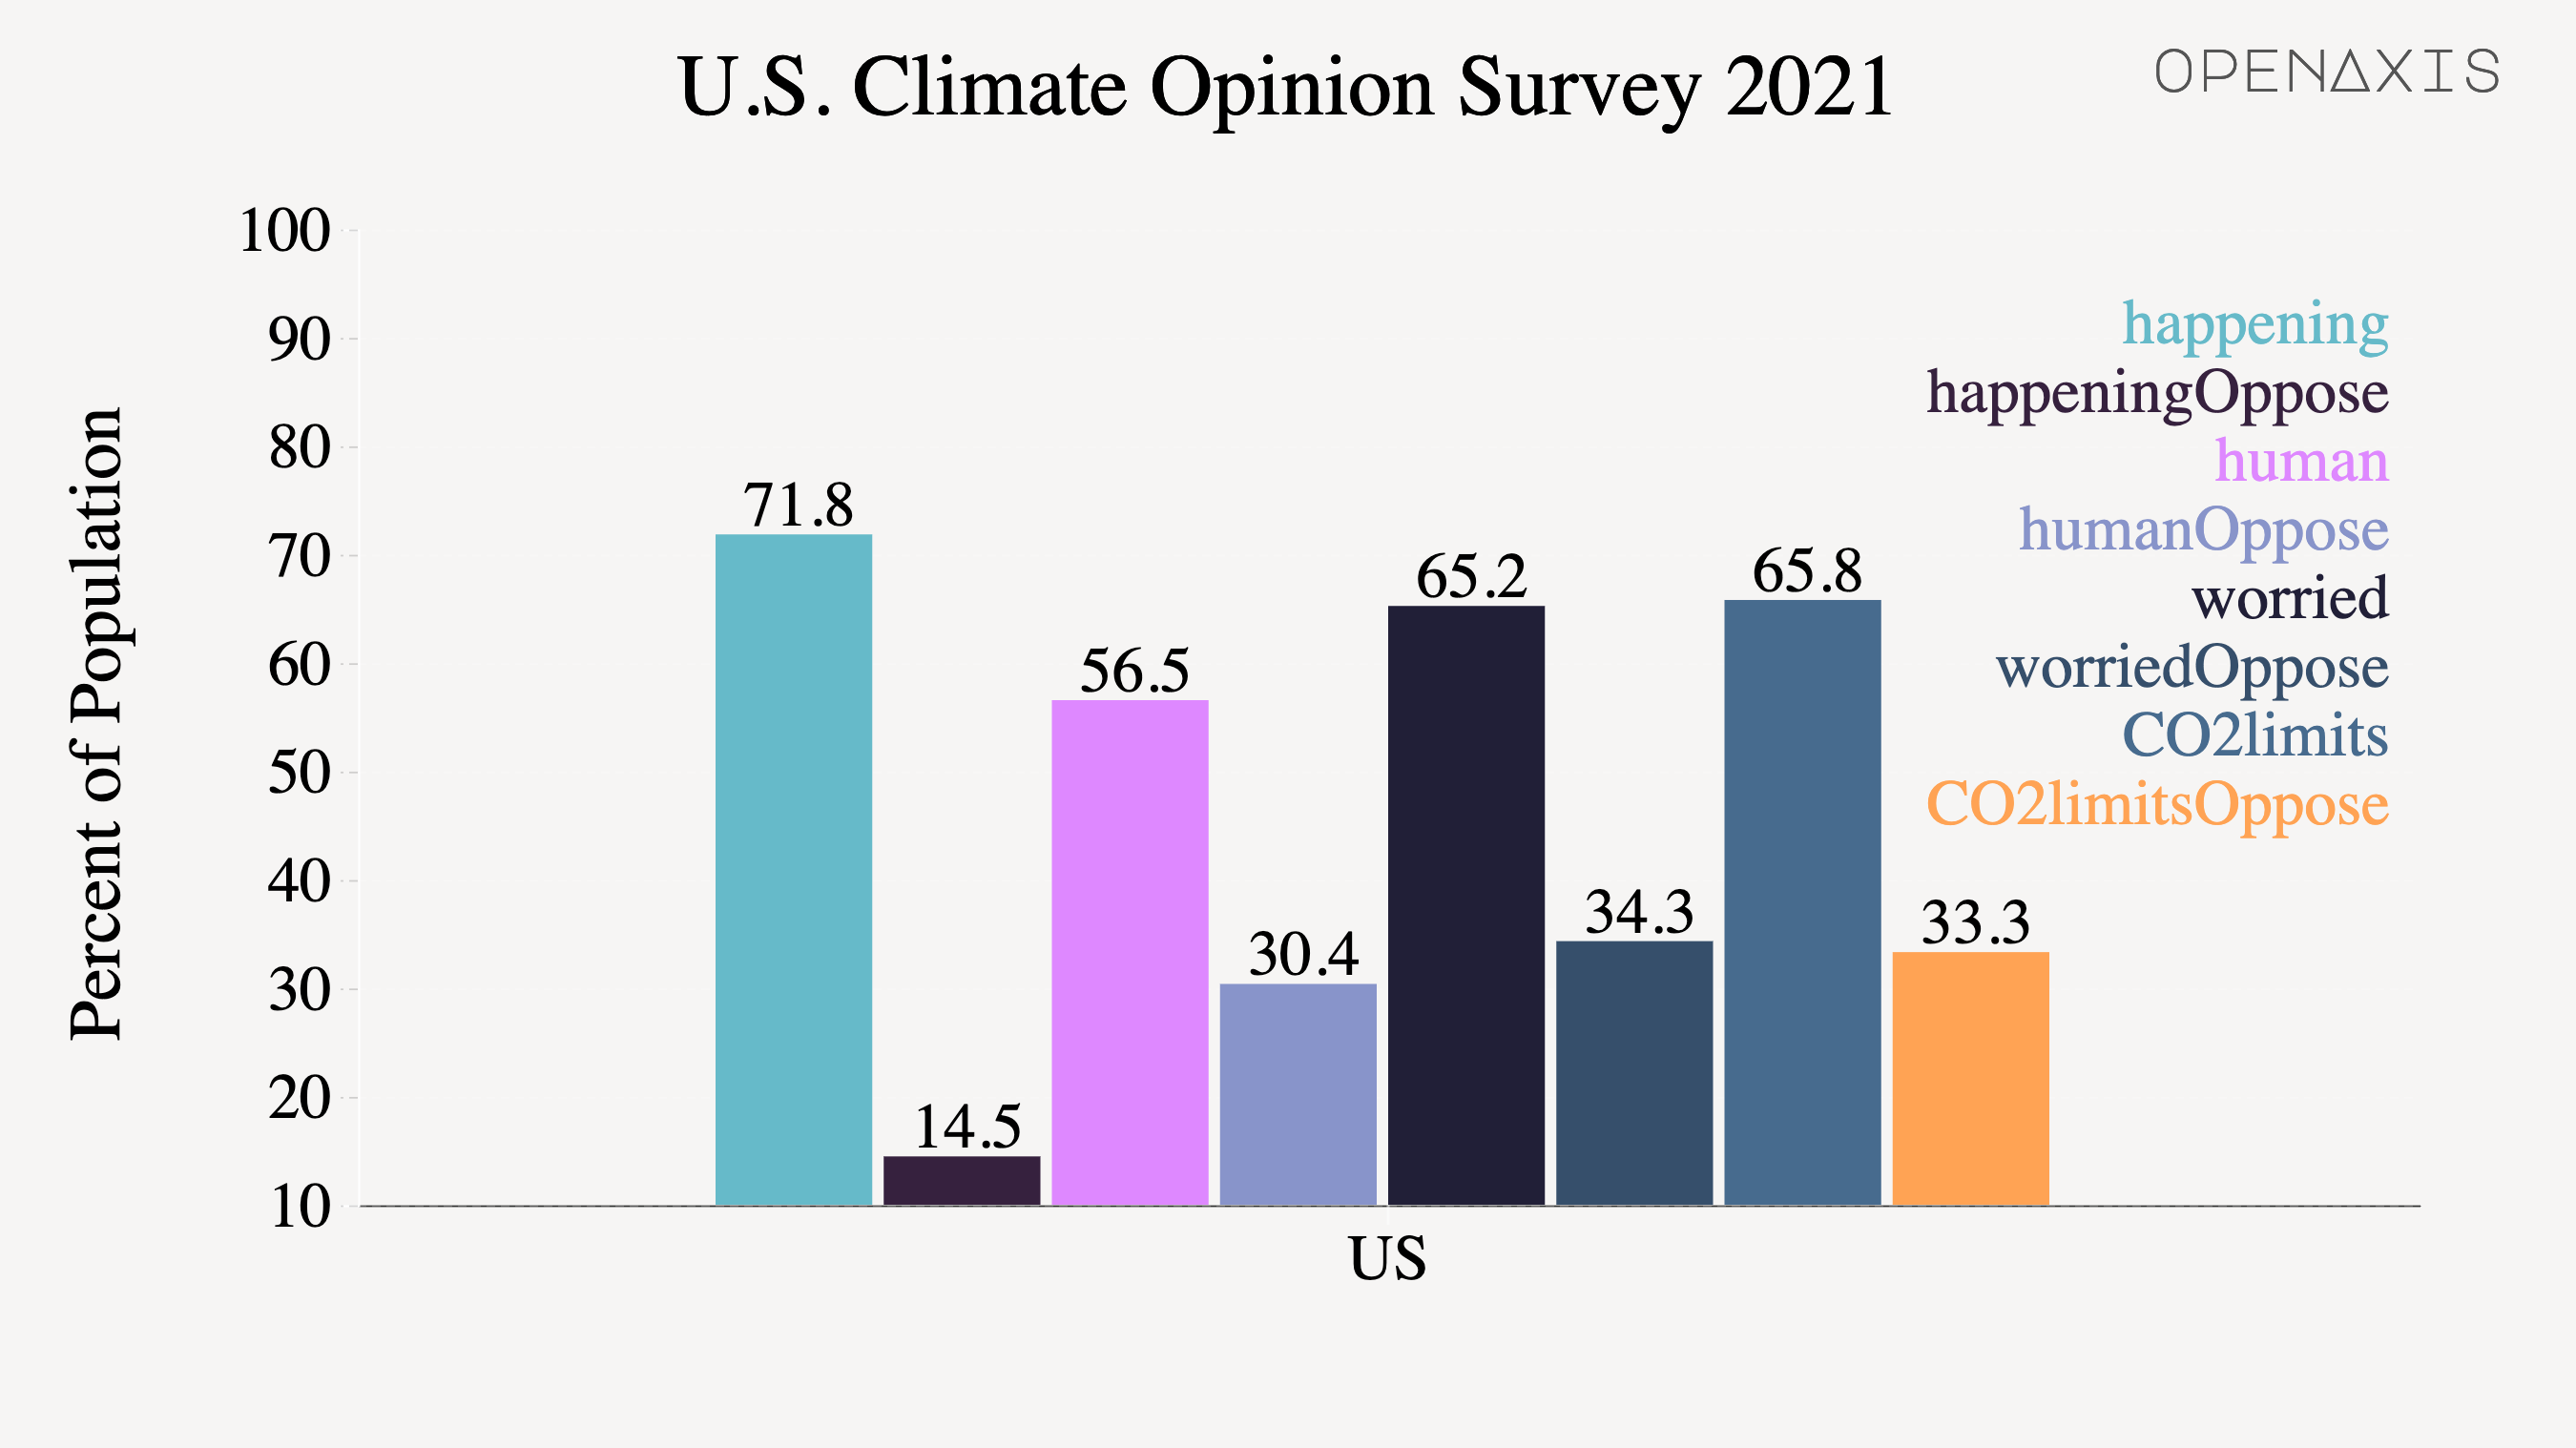 "U.S. Climate Opinion Survey 2021"